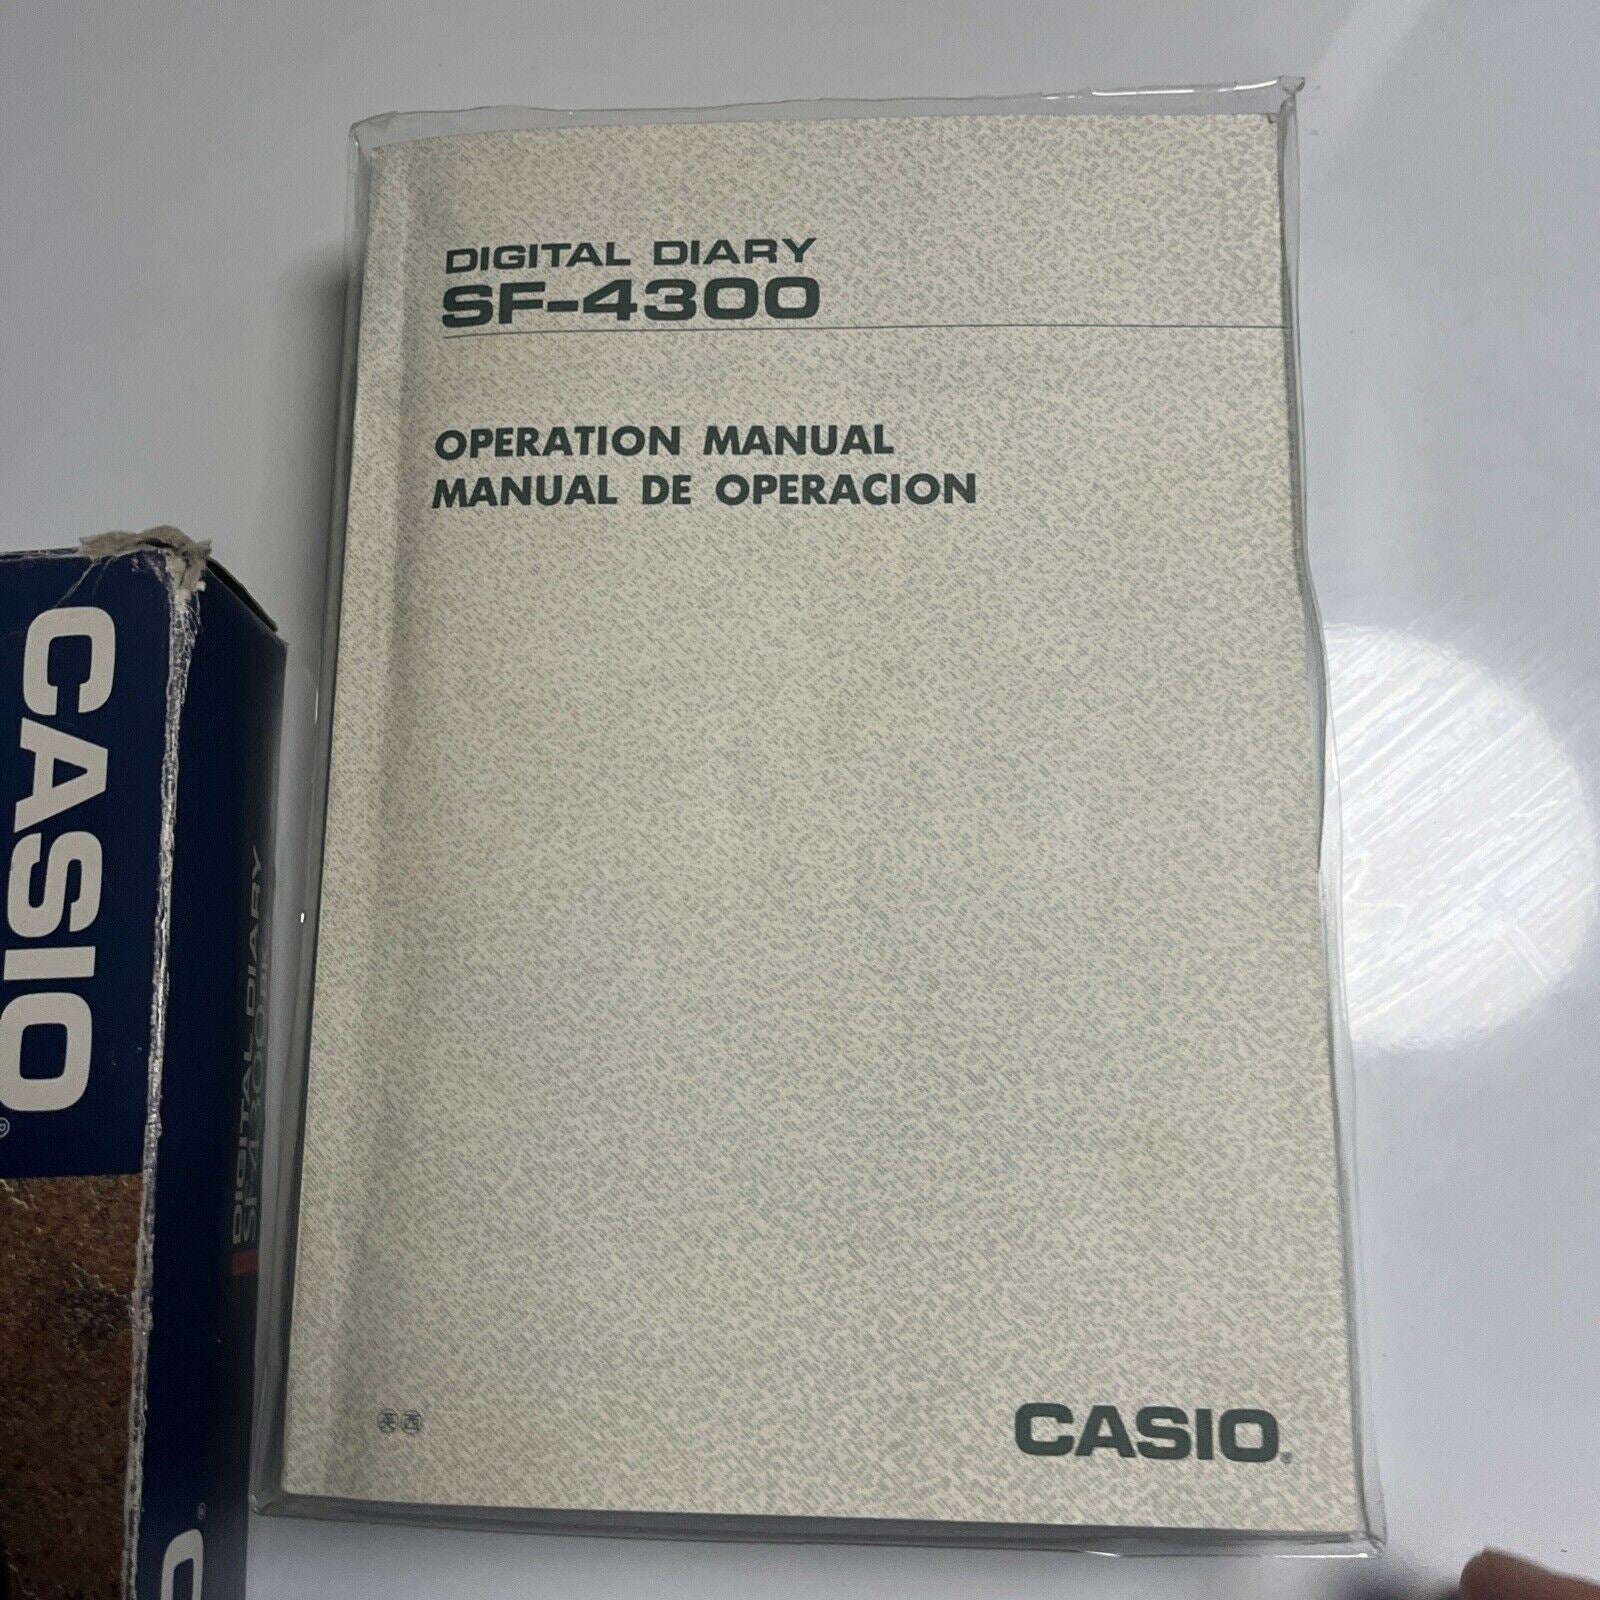 CASIO SF-4300B BLACK Portable 32KB Digital Display Diary Electronic  Organizer $99.99 - PicClick